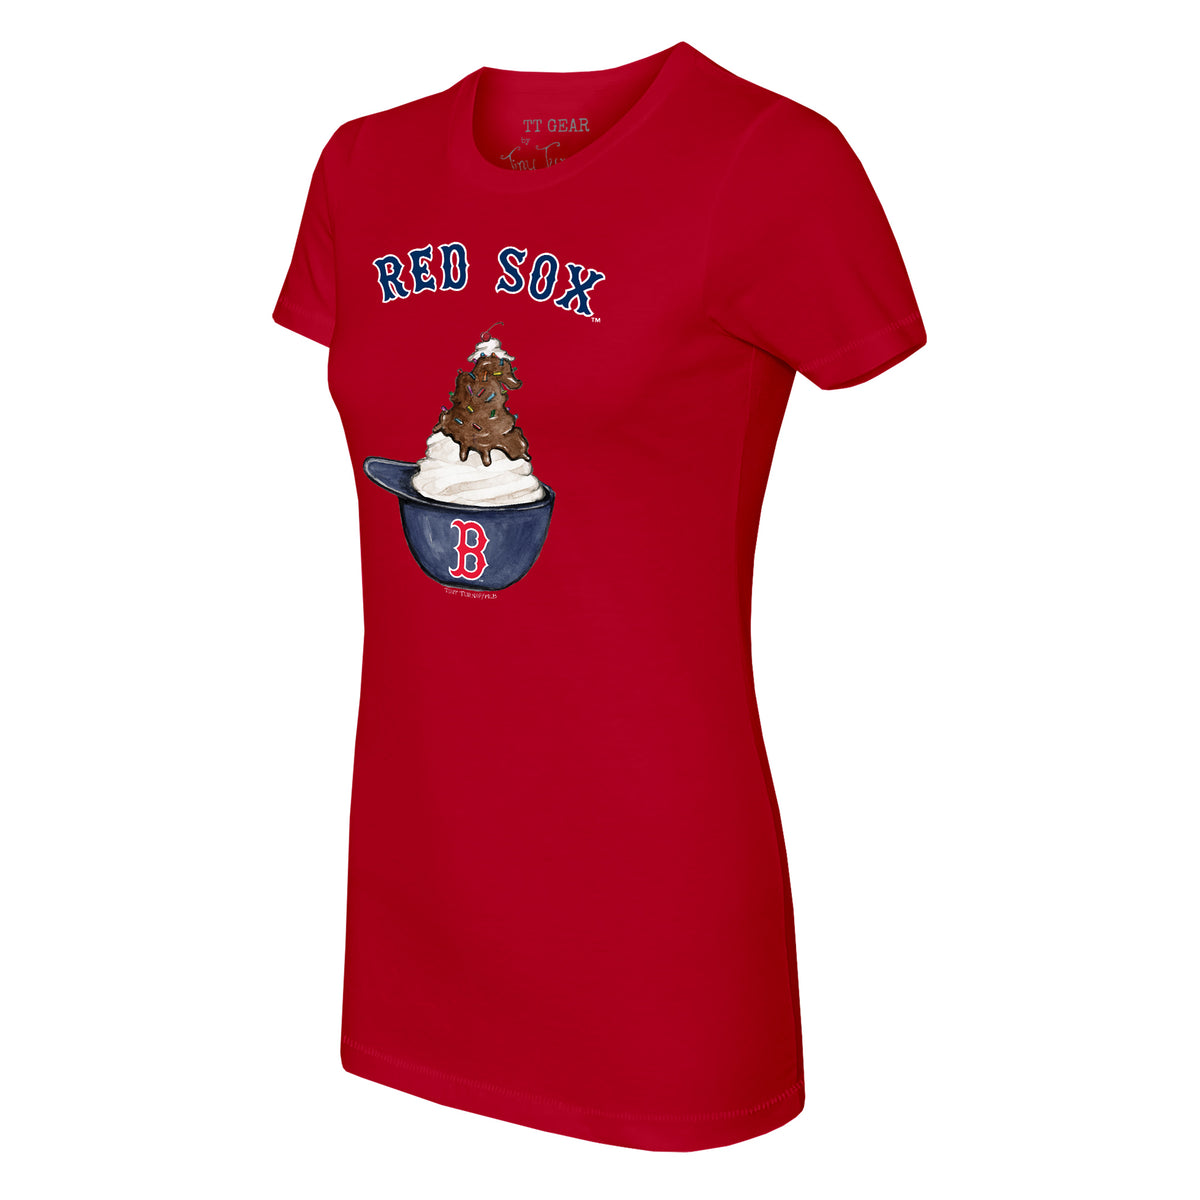 Boston Red Sox Sundae Helmet Tee Shirt